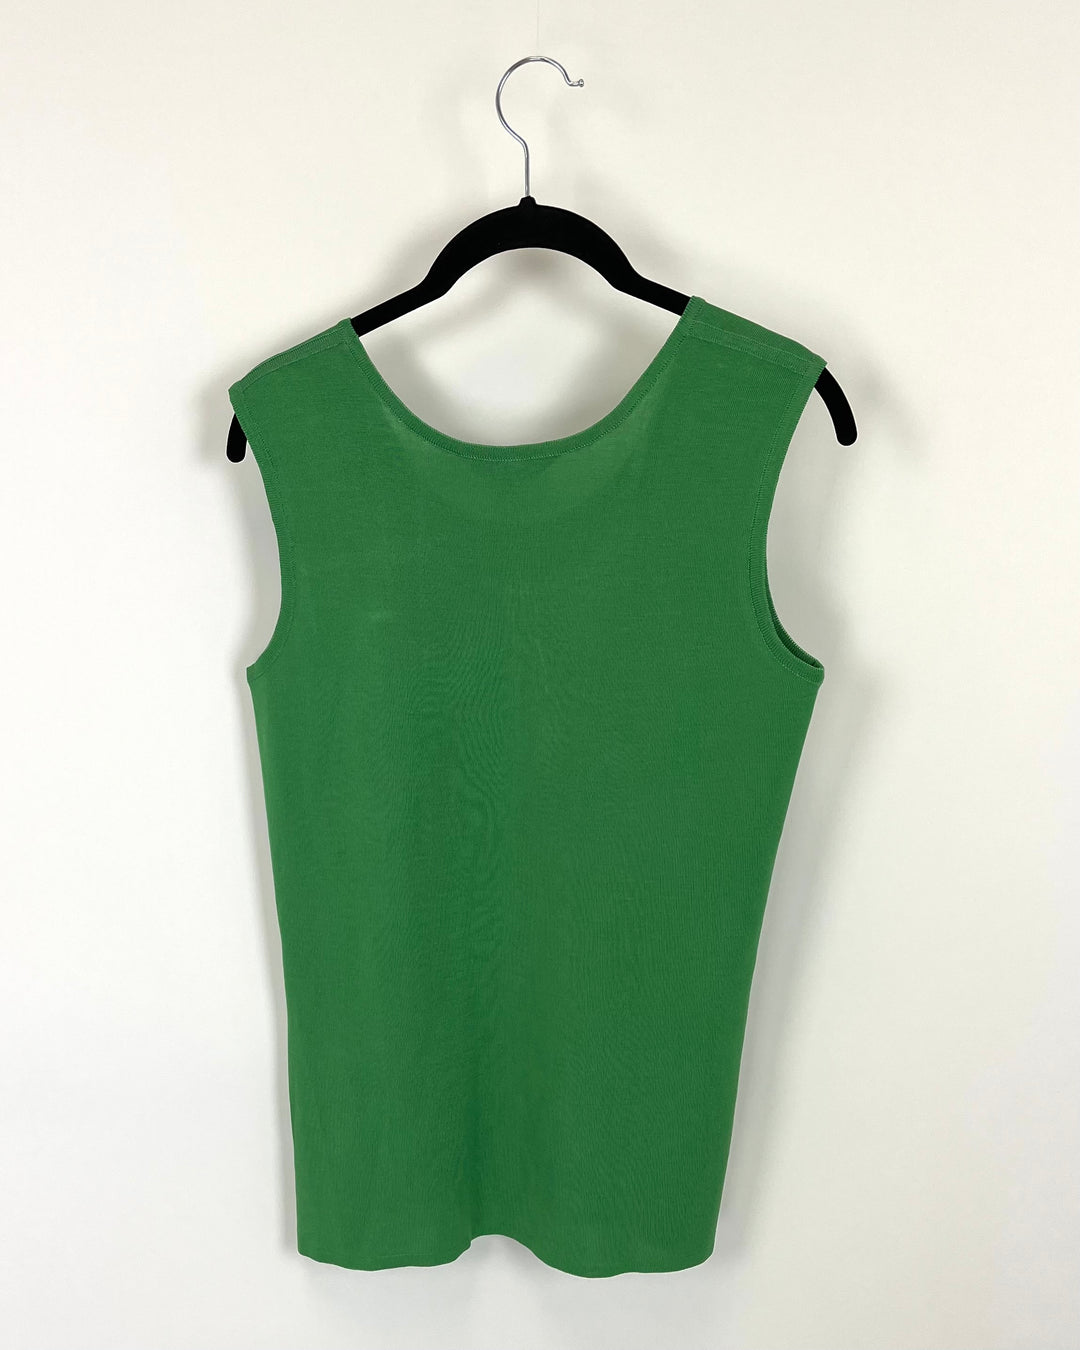 Green Knit Tank Top - Size 2/4